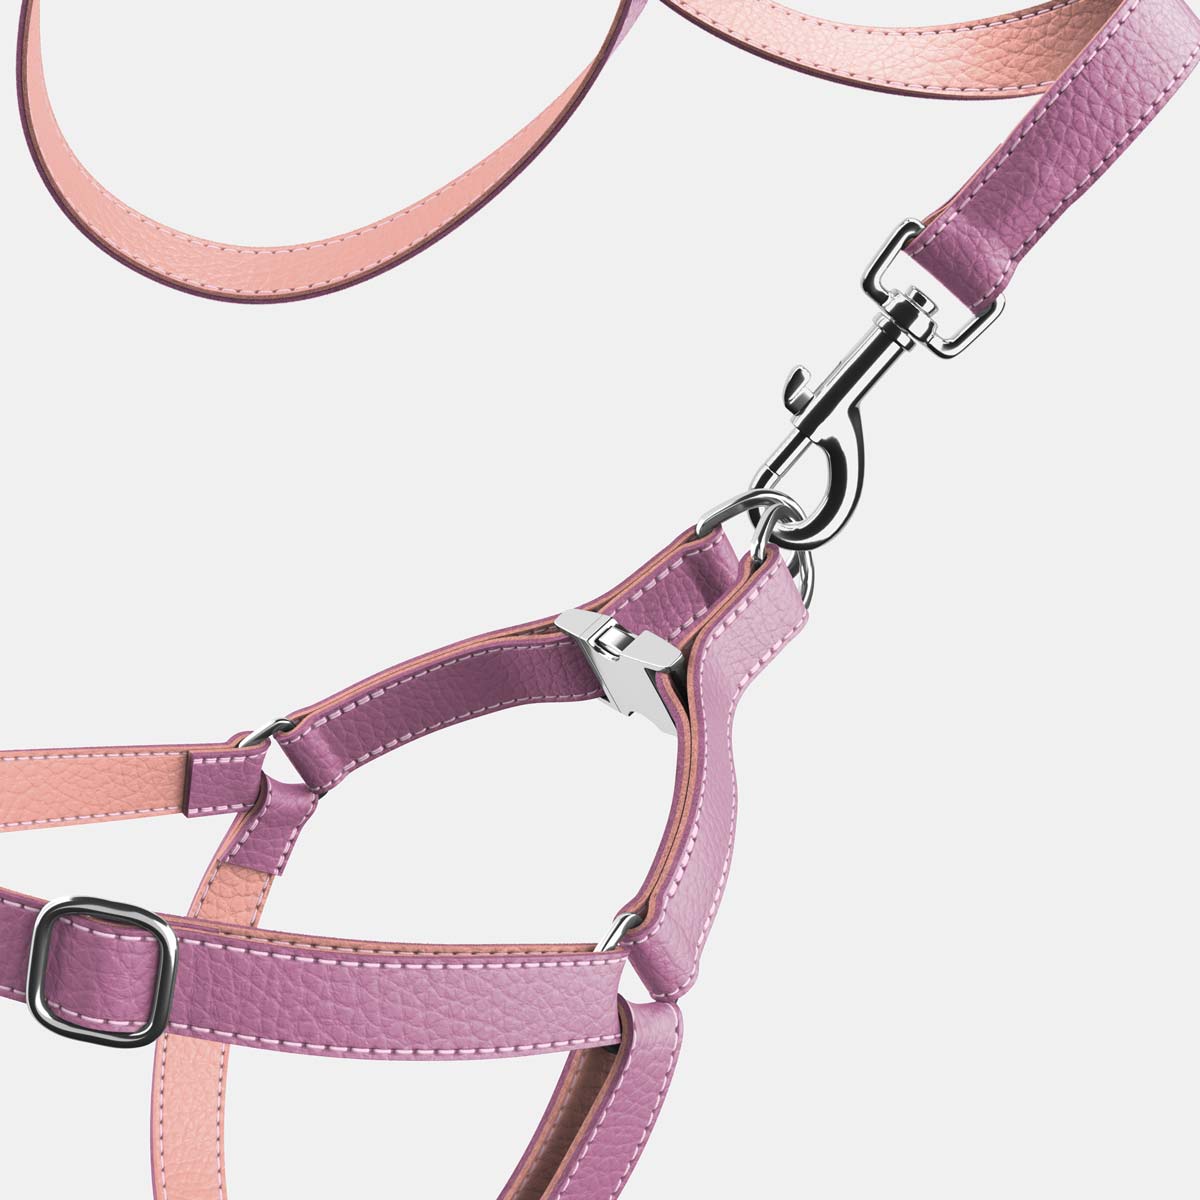 Leather Dog Harness - Purple and Pink - RYAN London